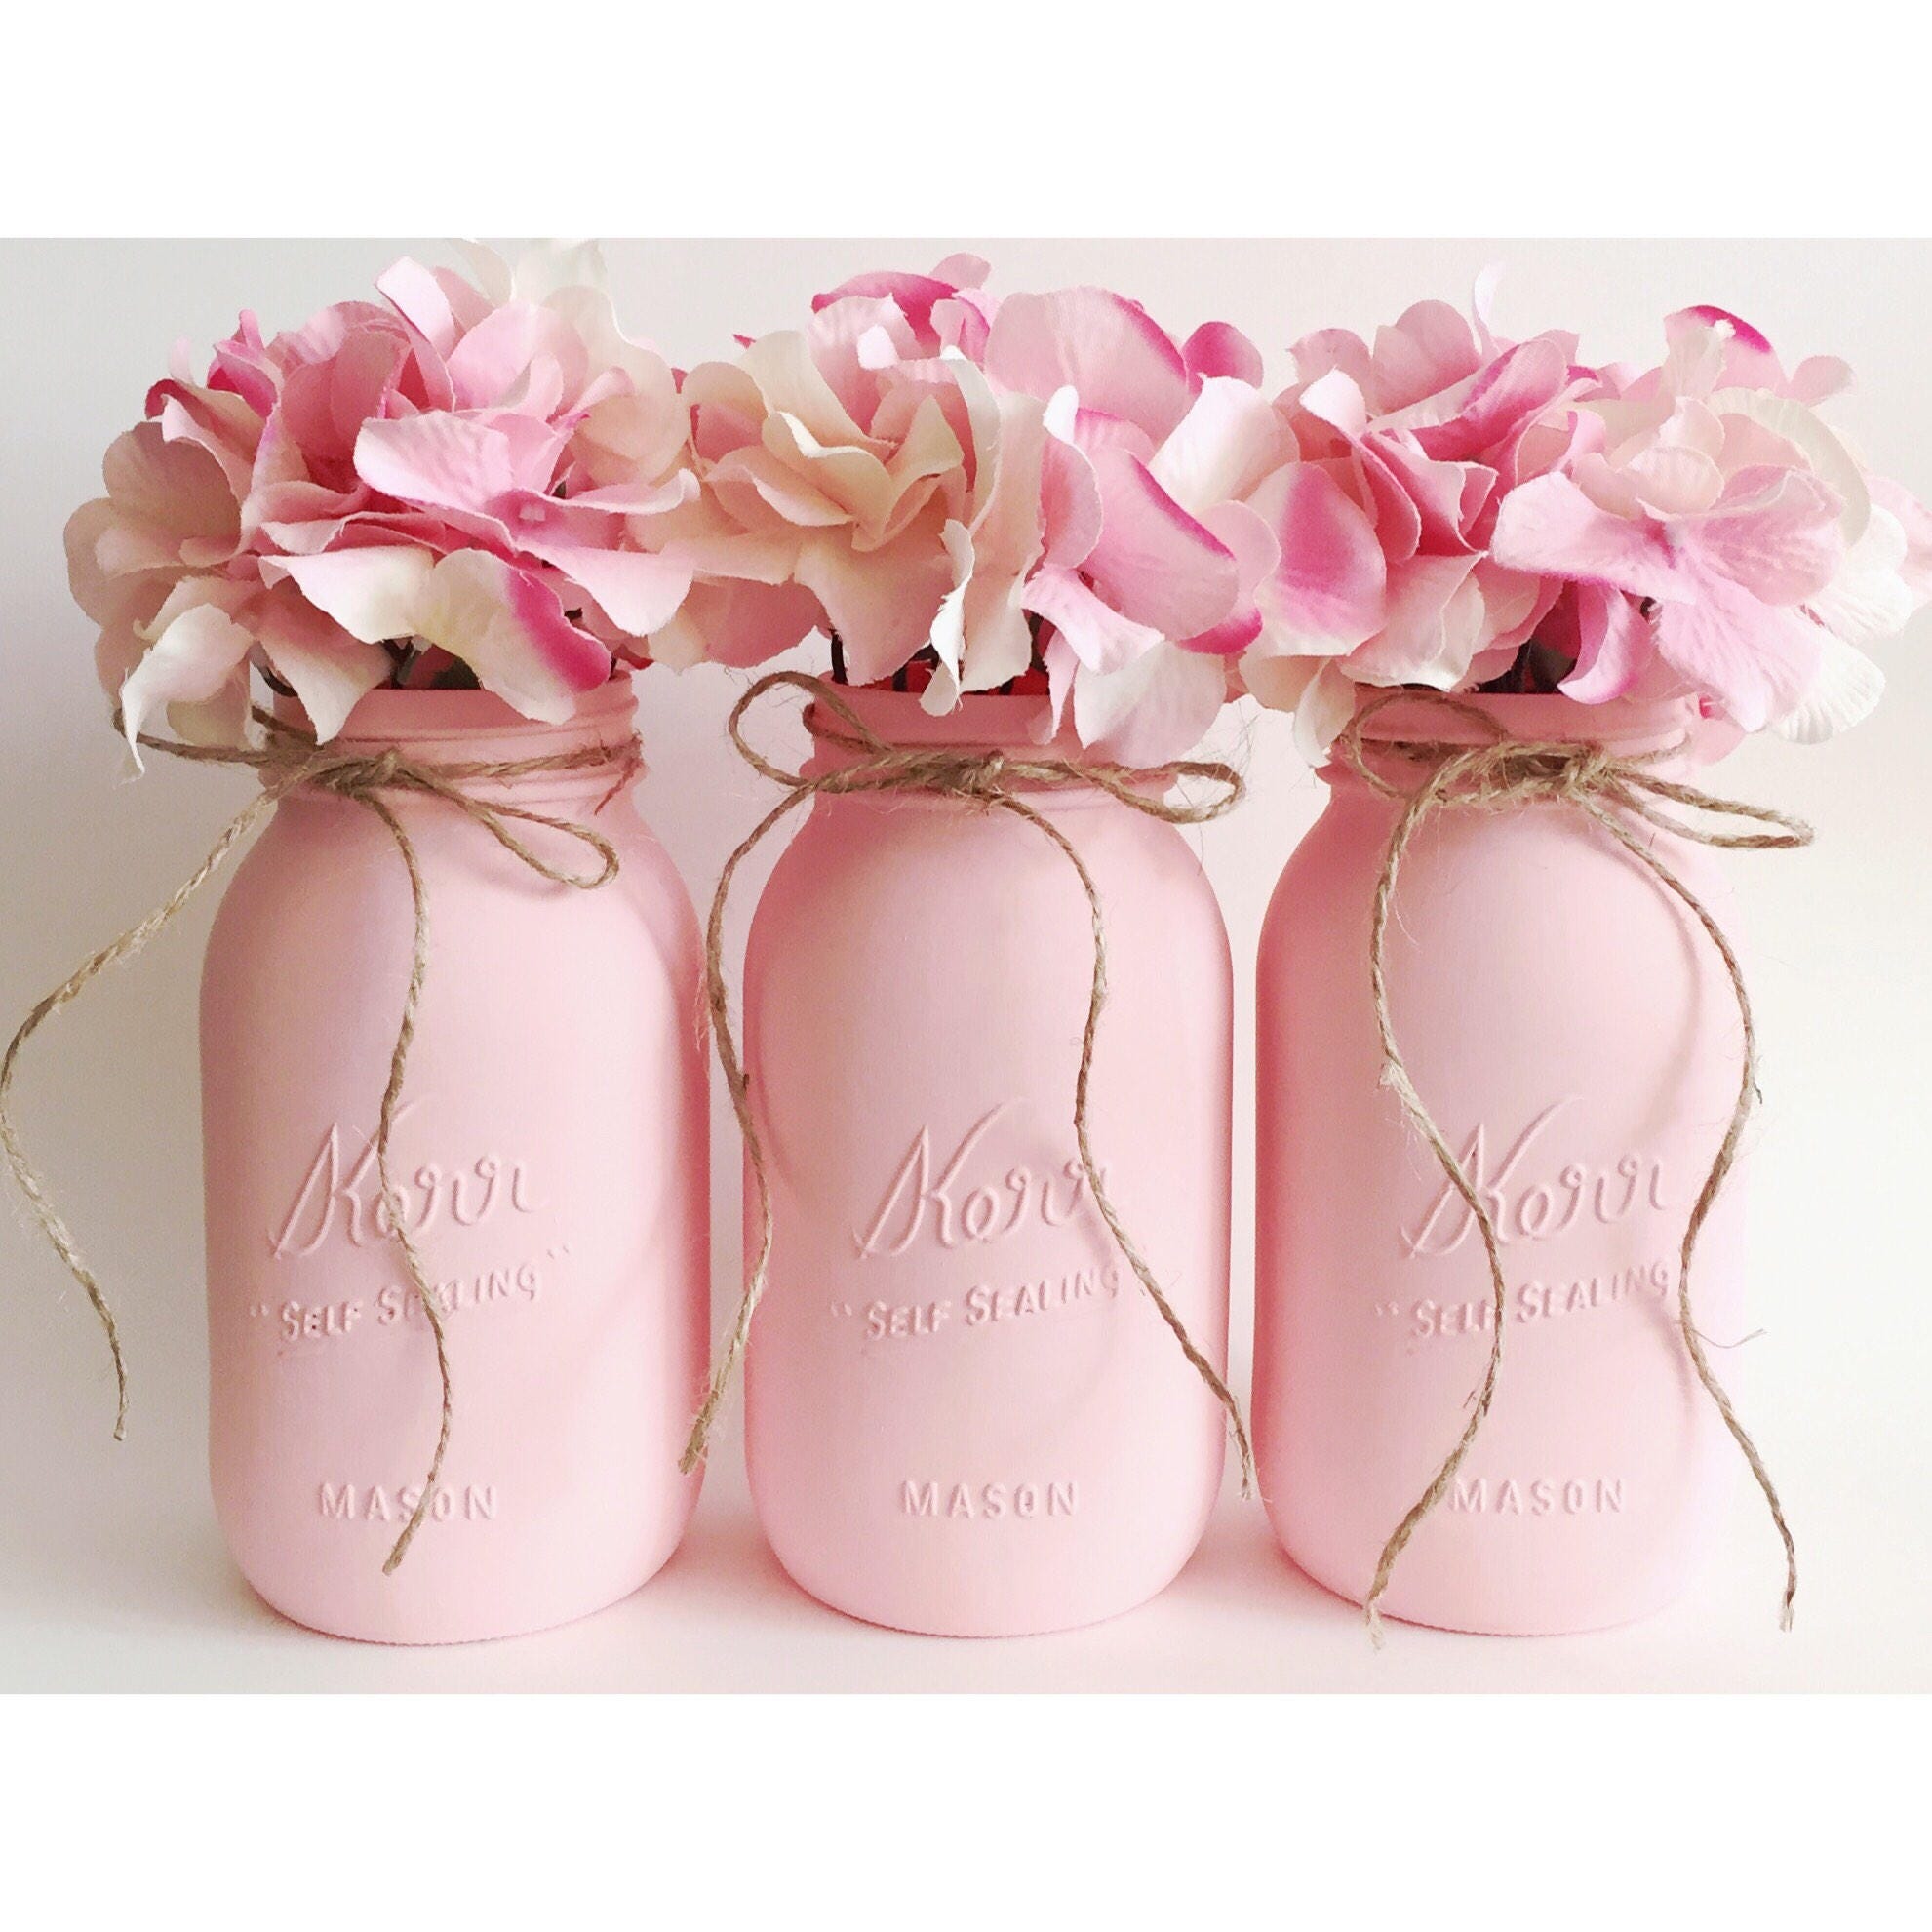 Blush Pink Pint Ball Mason Jar, One 16 Oz. Pint Size, Farmhouse Home Decor,  Rose Pink Mason Jar, Pink Vase Centerpiece Mother's Day Gift 